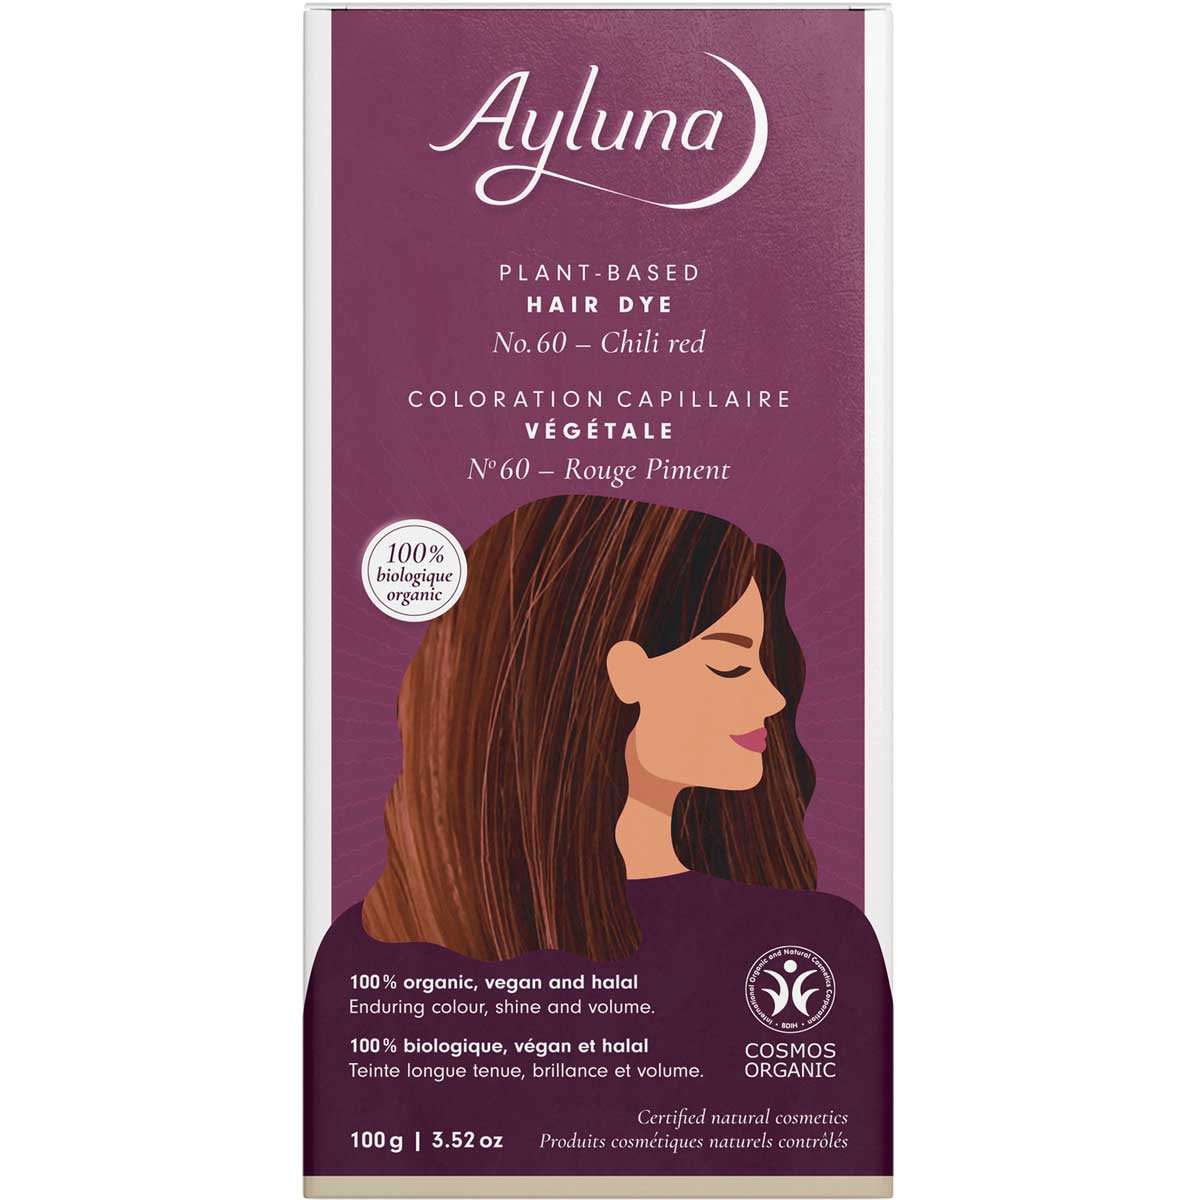 Ayluna Chili Red No.60 Plant-Based Hair Dye 100g